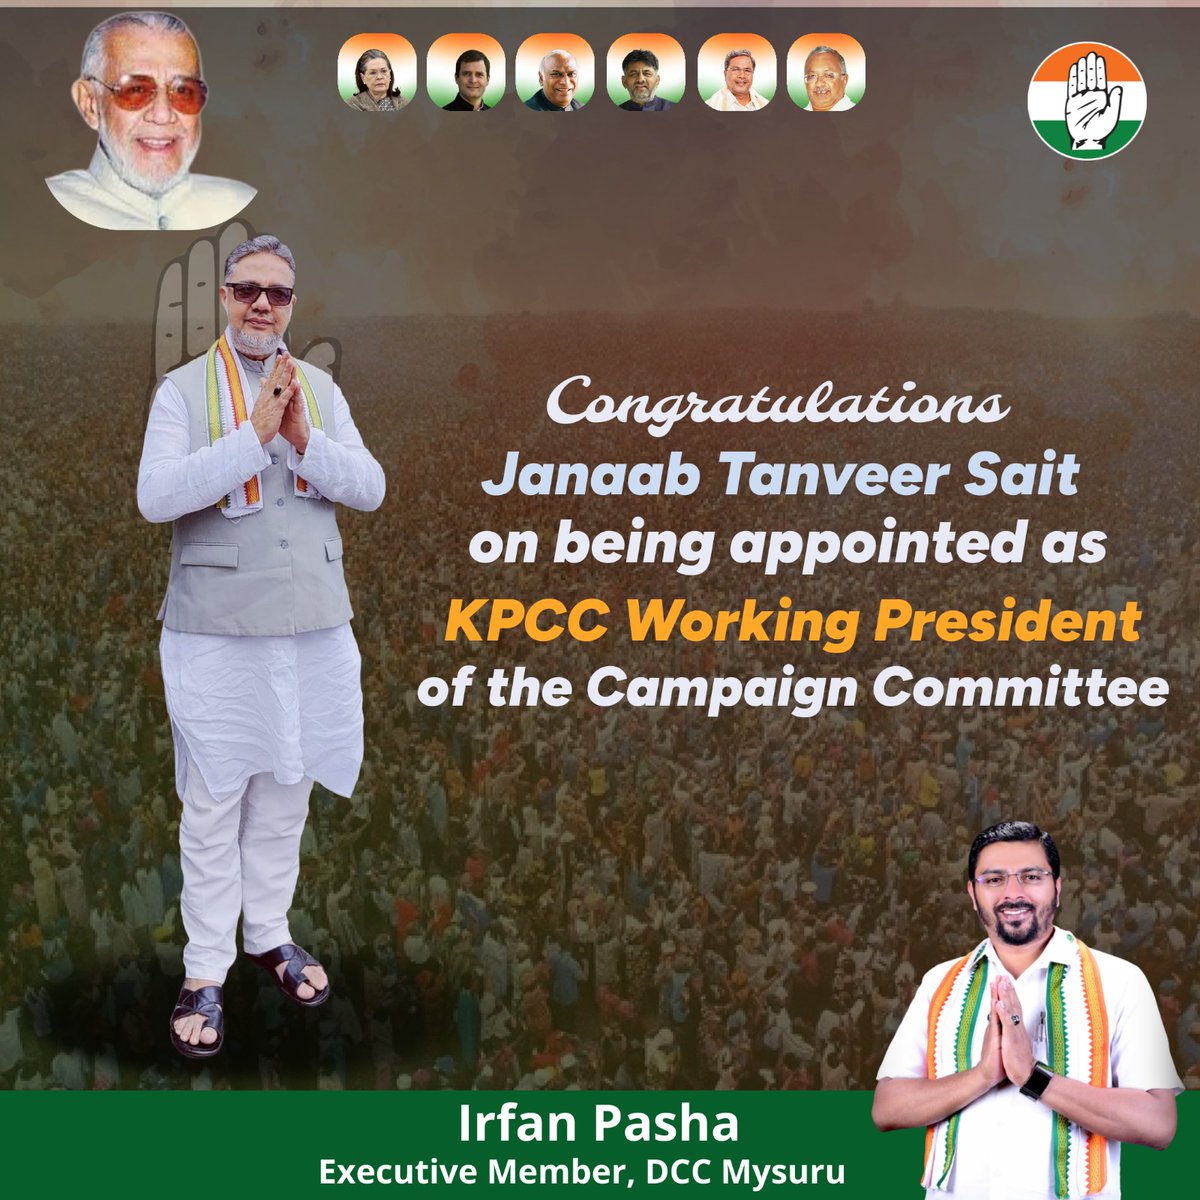 Congratulations @TanveerSaitINC on being appointed as Working President of KPCC Campaign Committee. 

#Karnataka #kpcc #karntakacongress #CongressKiSarkar